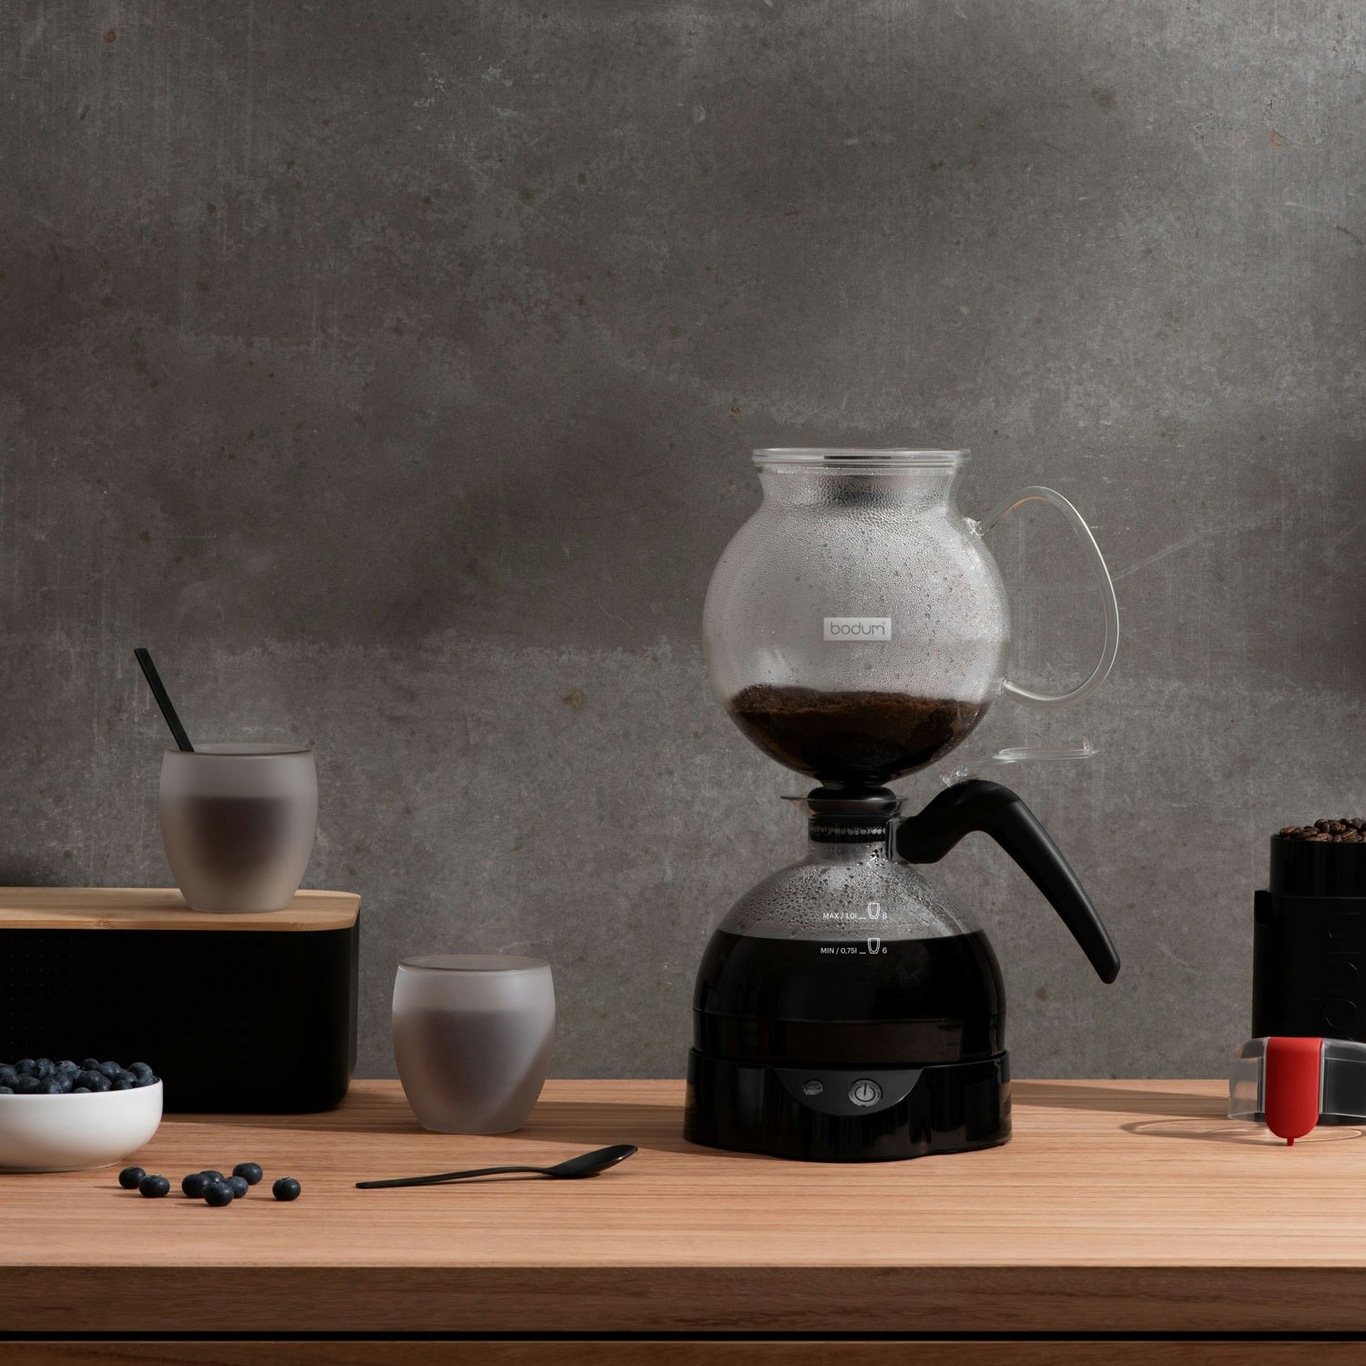 https://royaldesign.co.uk/image/6/bodum-edon-pedro-coffee-maker-1-l-0?w=800&quality=80